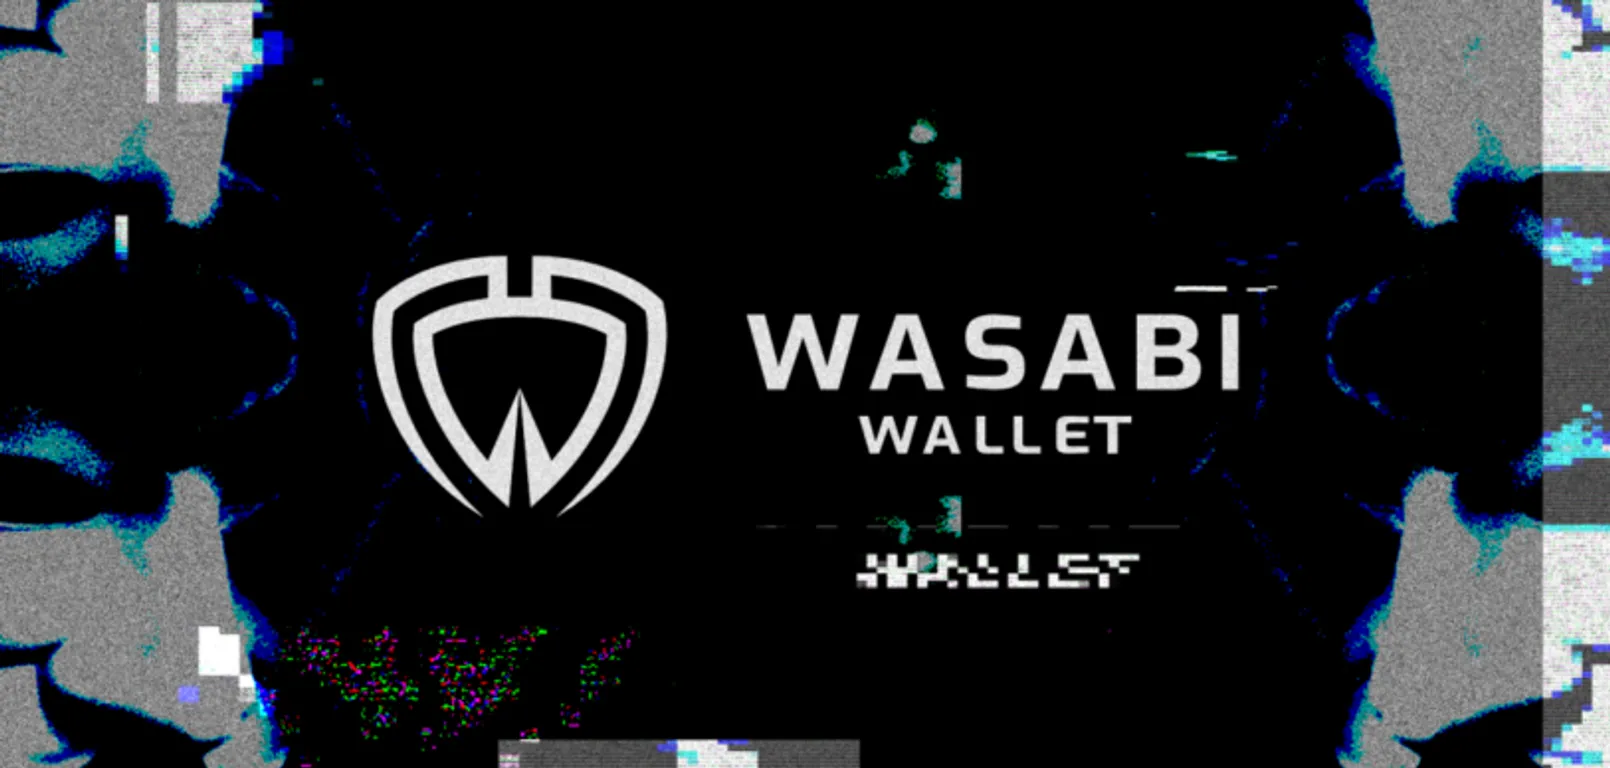 Wasabi Wallet Parent Company Explains Decision to Censor Bitcoin Transactions 813x388 1.png